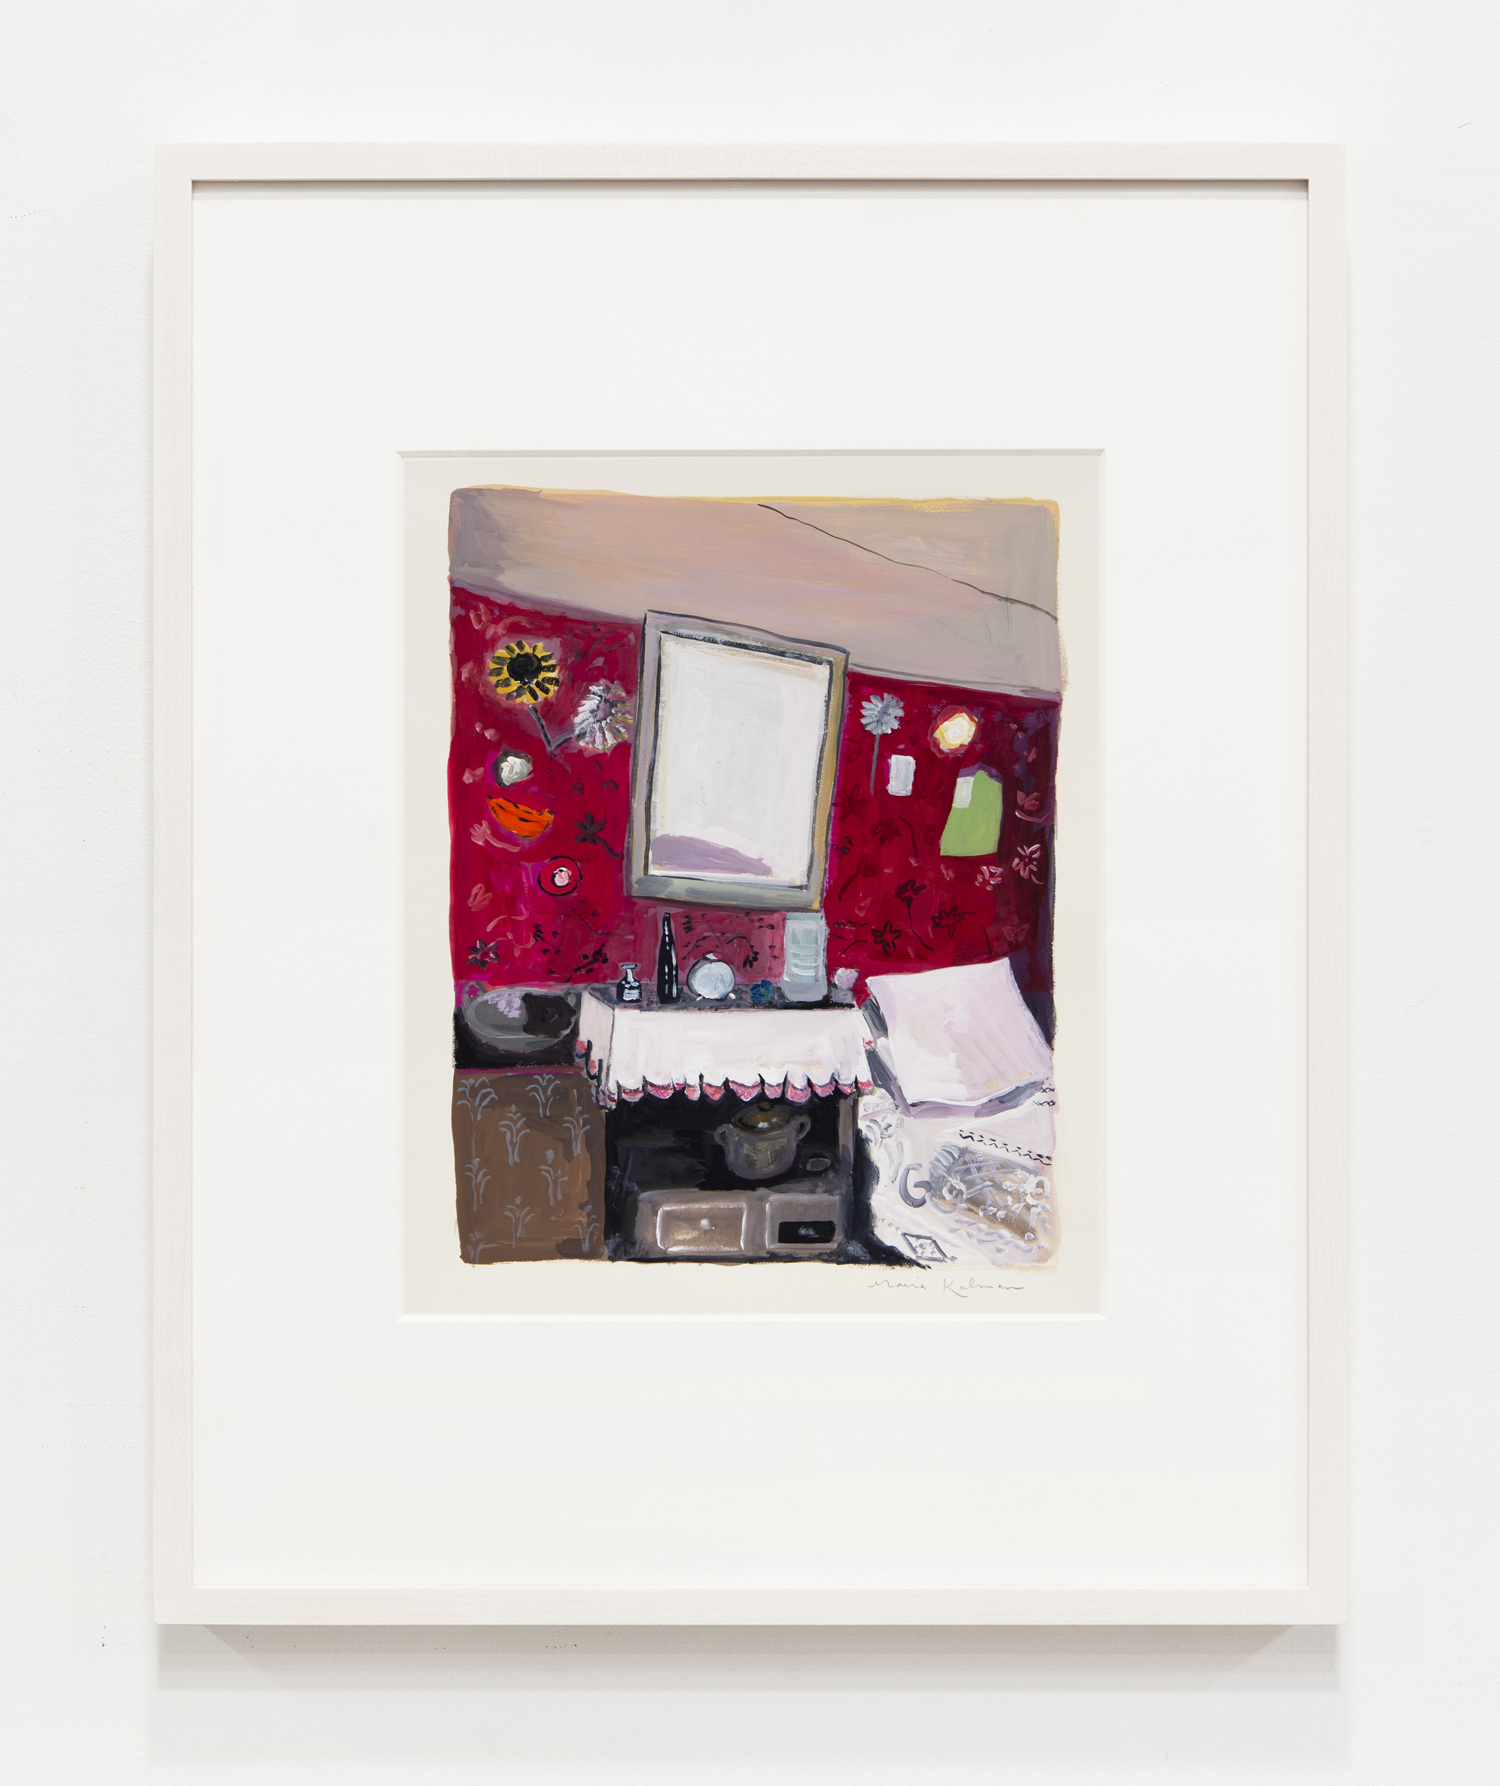 Maira Kalman Paris Bed, 2022 Gouache Image Dimensions: 11 1/2 x 8 3/4 inches (29.2 x 22.2 cm) Paper Dimensions: 15 1/4 x 11 inches (38.7 x 27.9 cm)